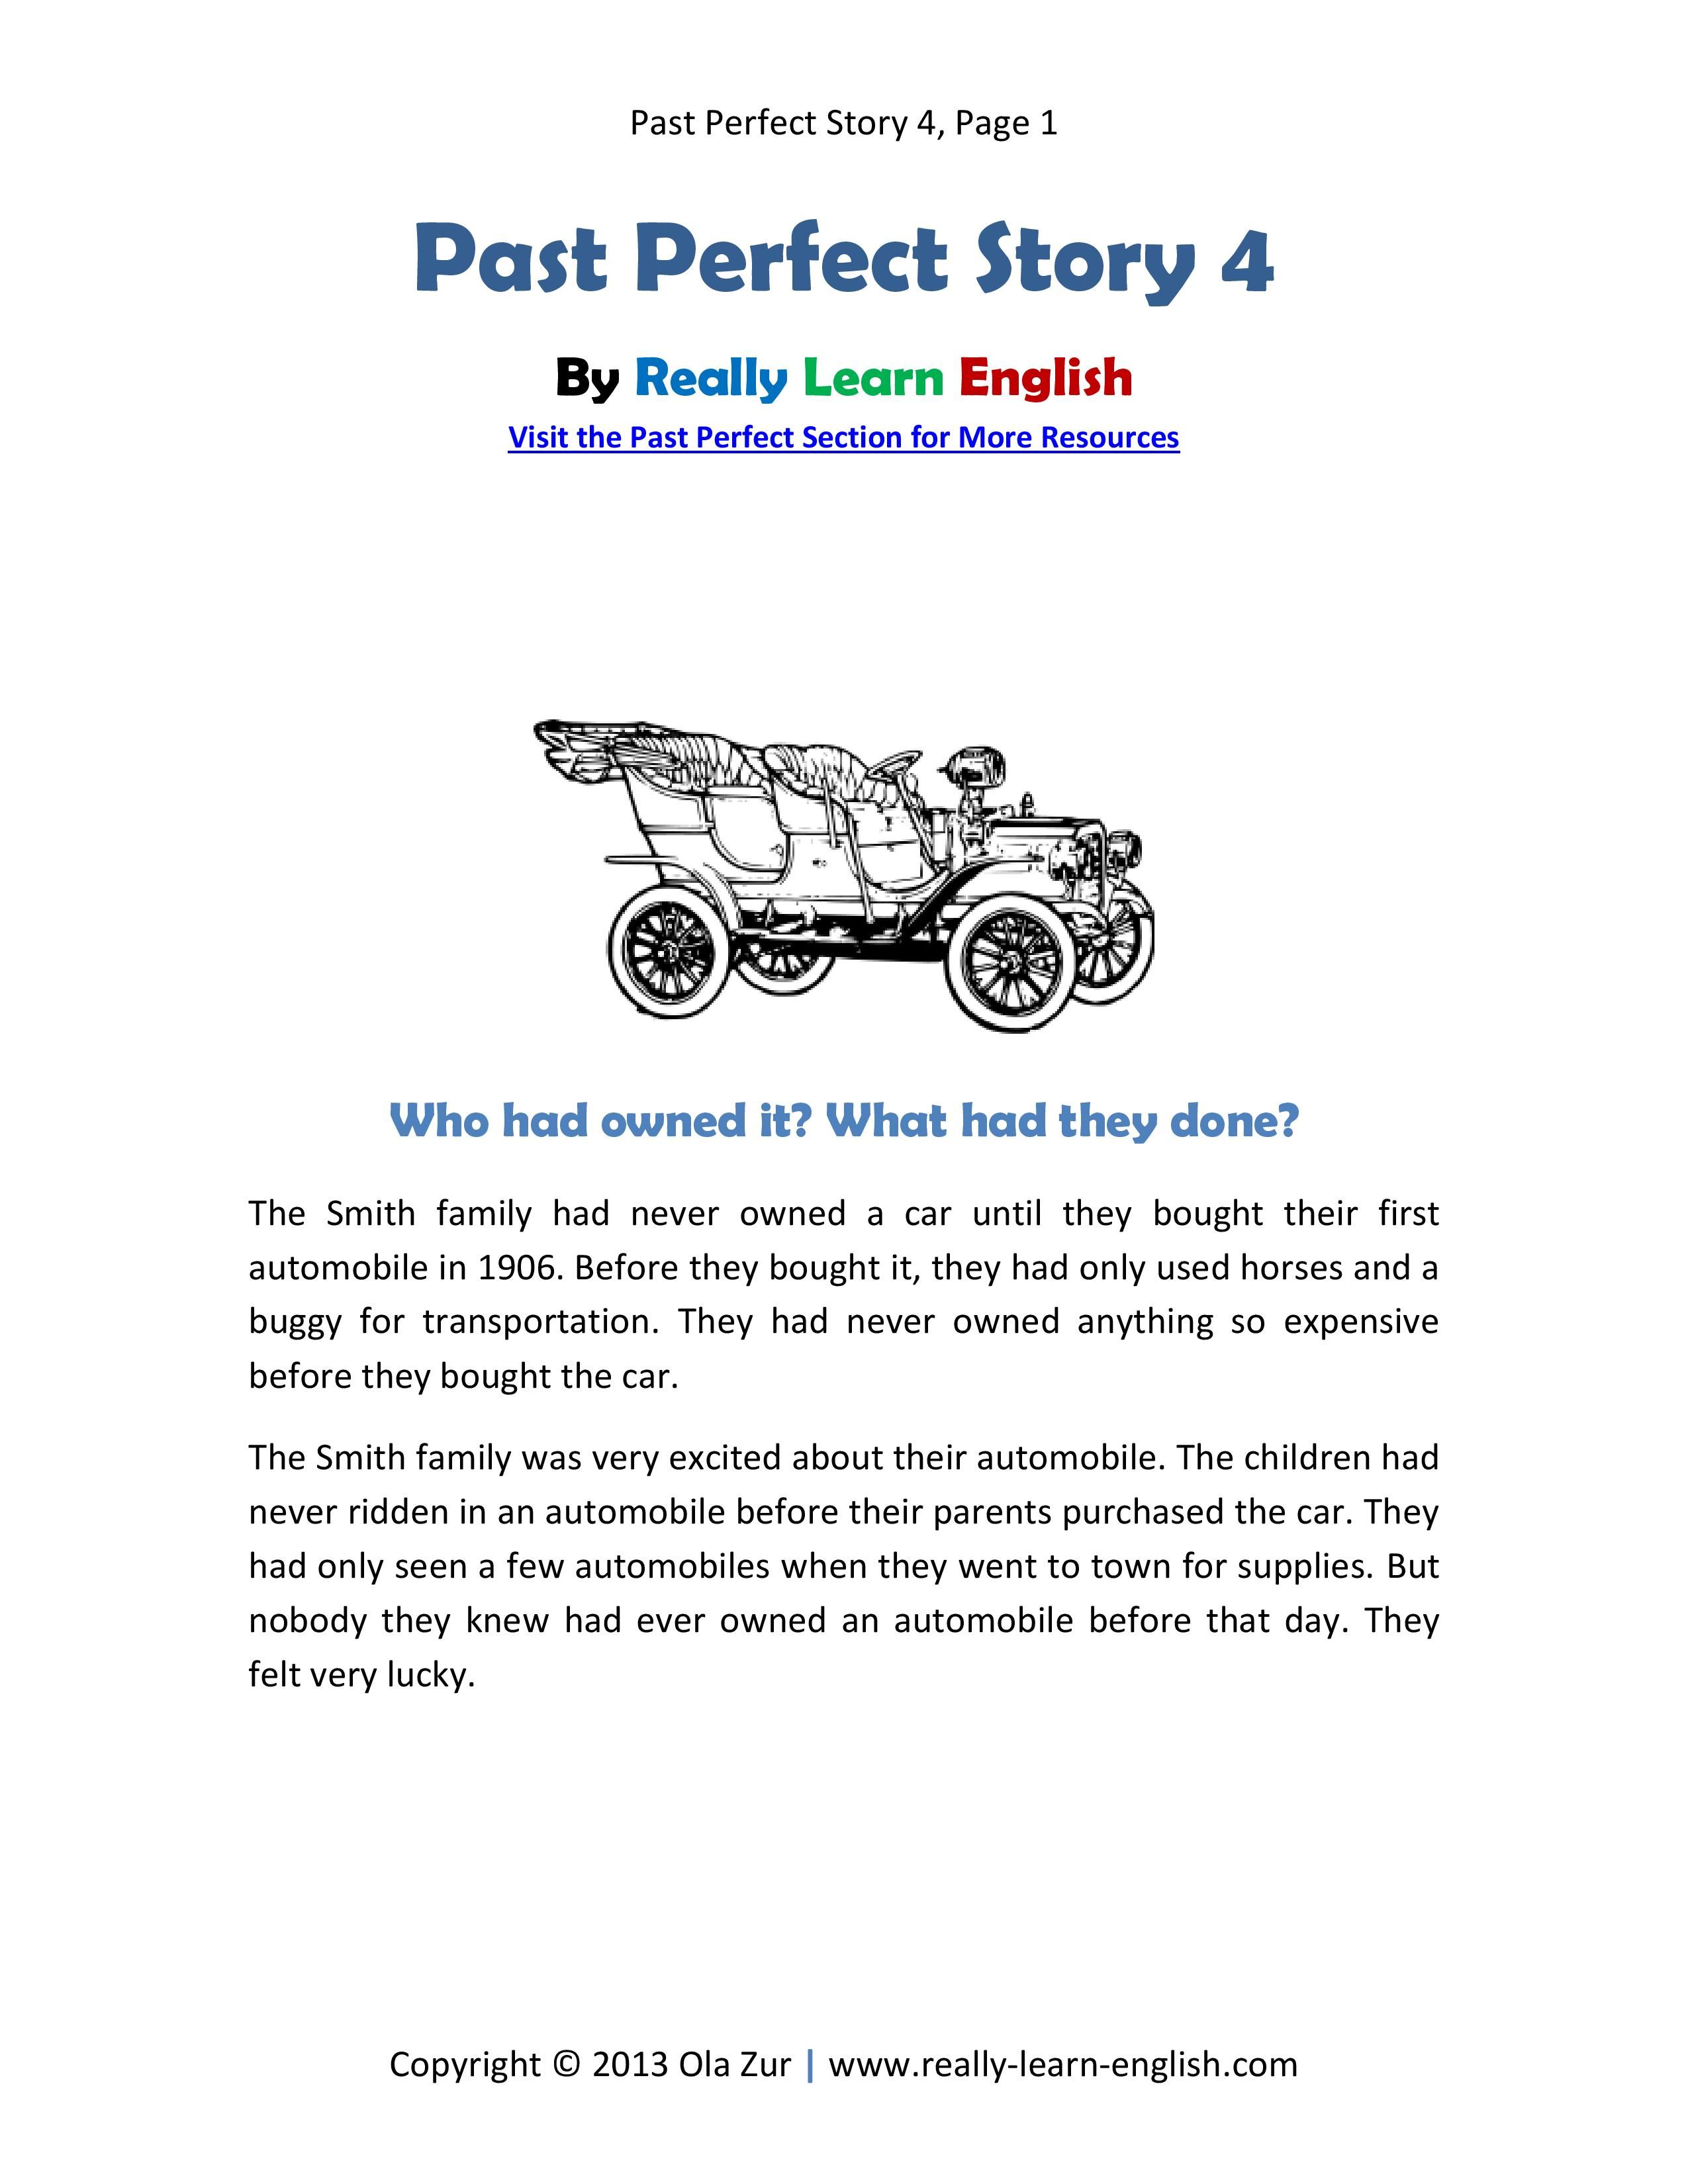 easy english short stories